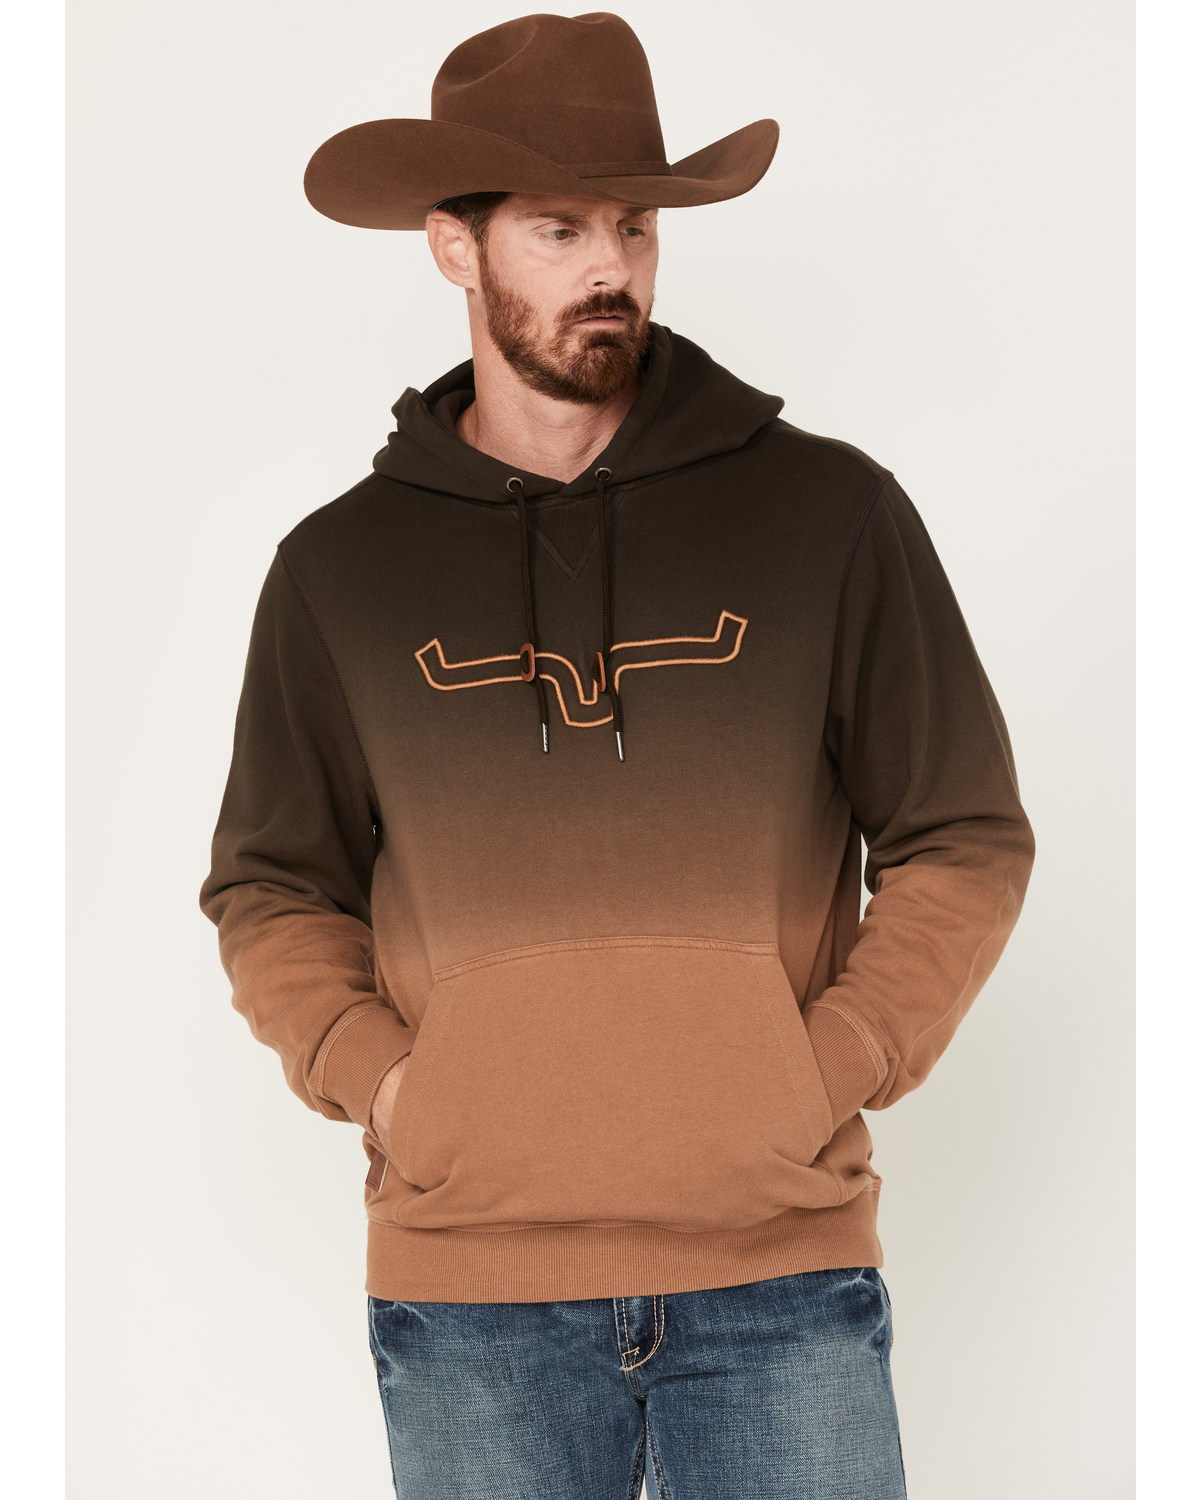 Kimes Ranch Men's Boot Barn Exclusive Layton Hooded Sweatshirt